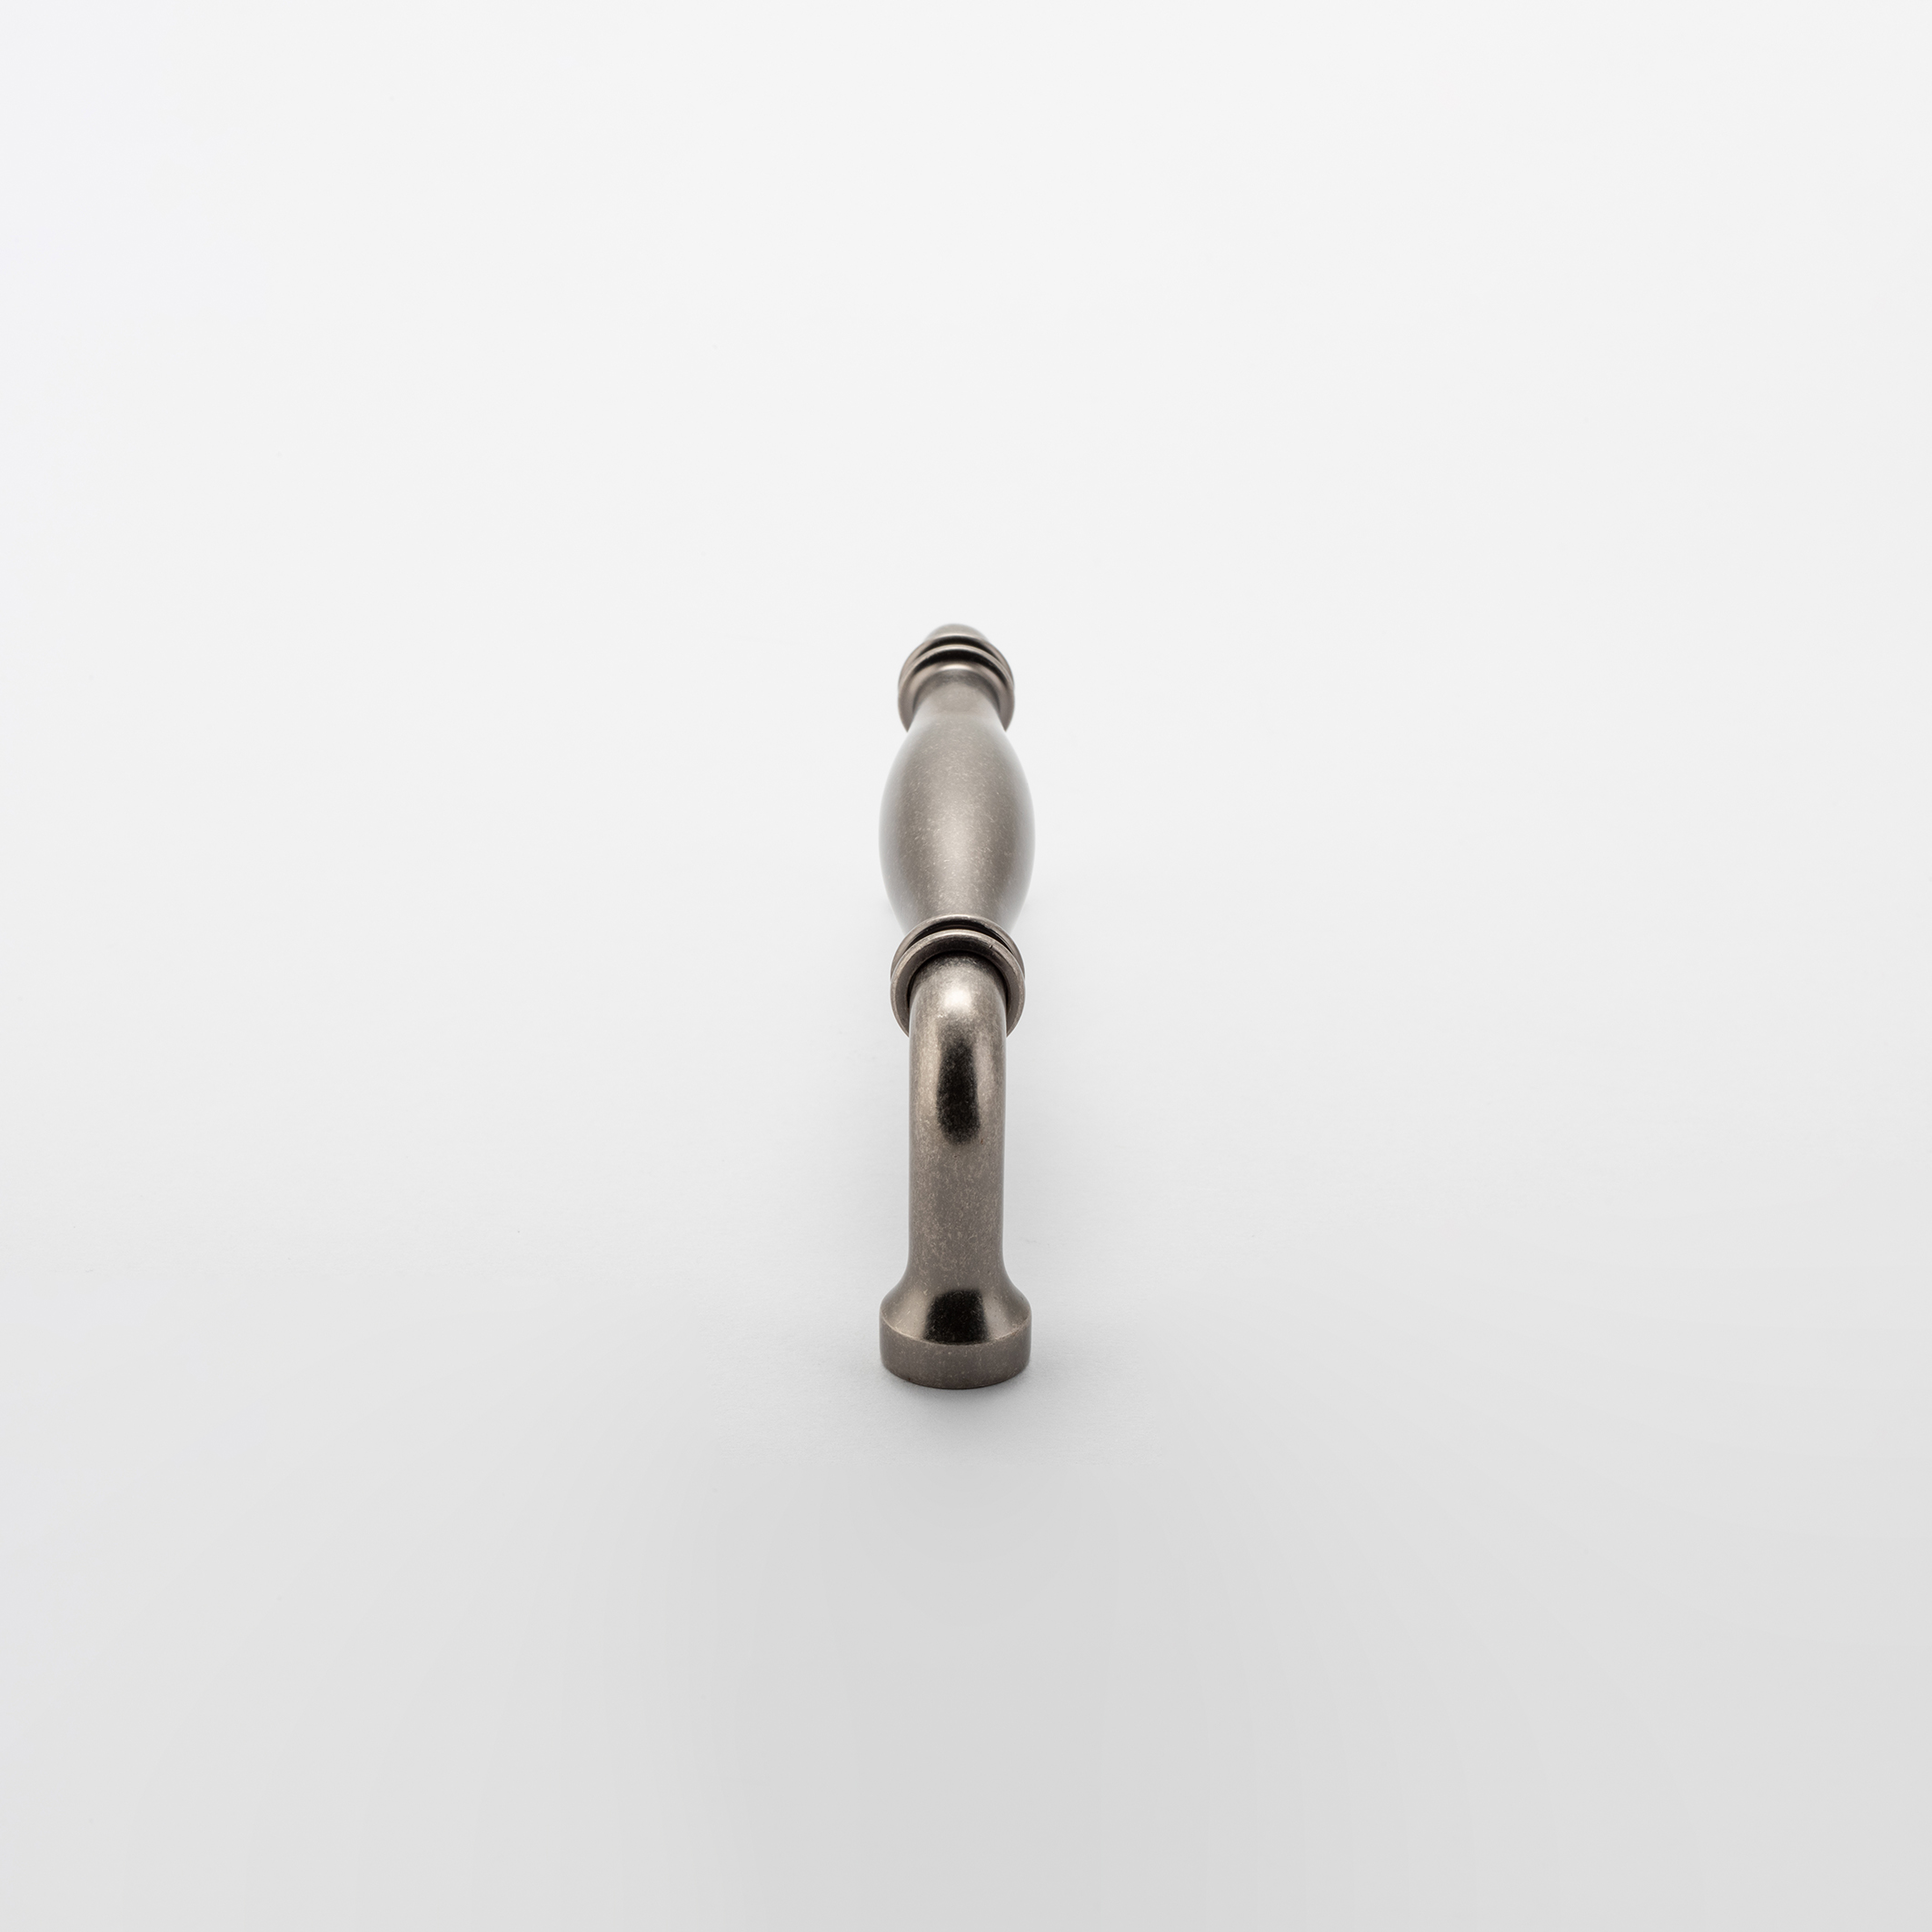 21097 - Sarlat Cabinet Pull - CTC320mm - Distressed Nickel